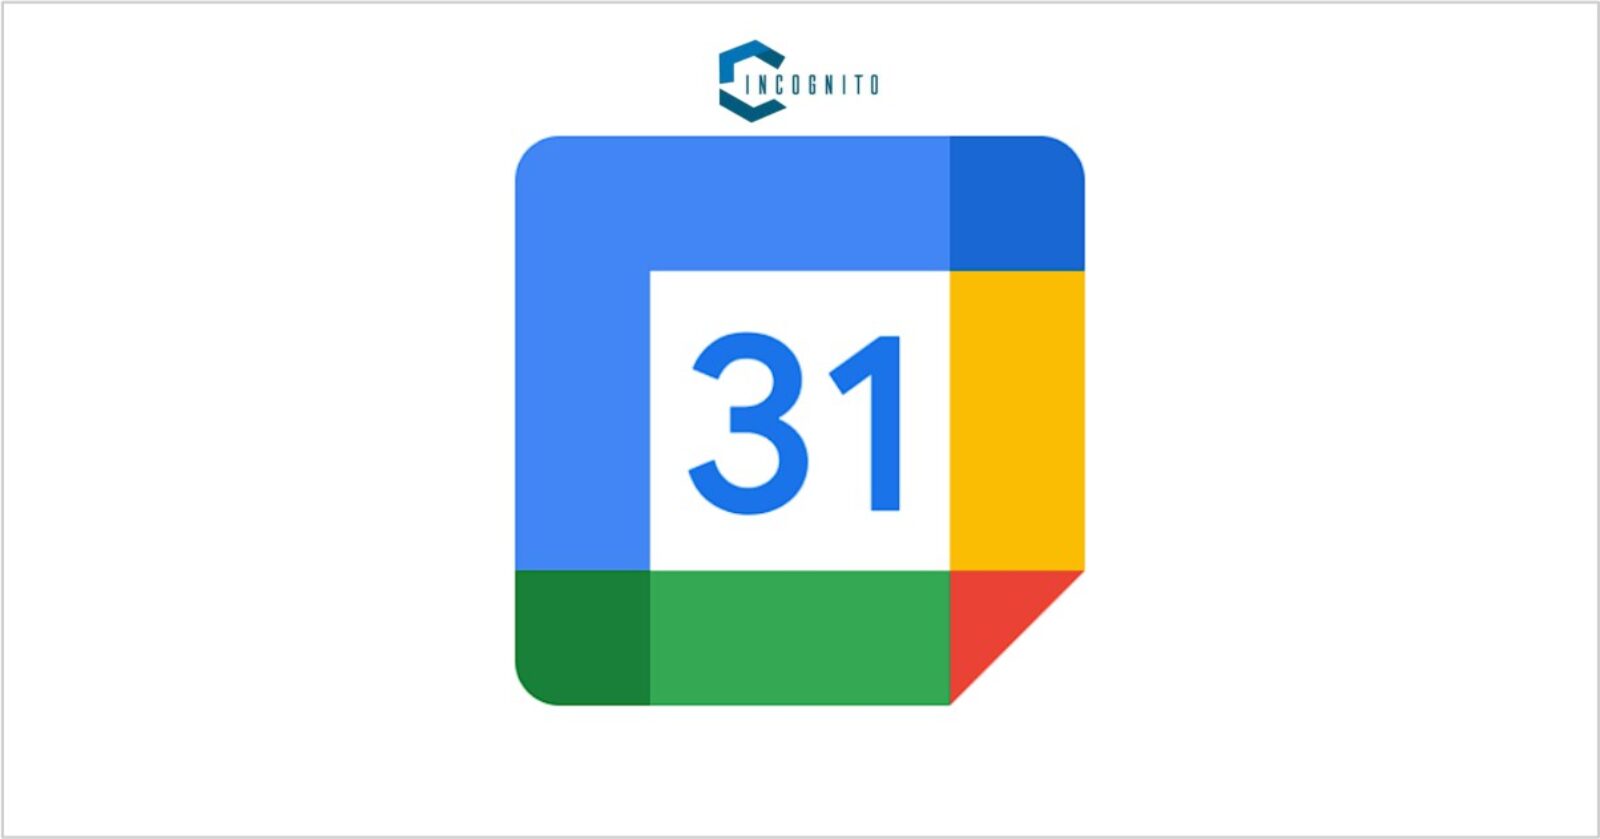 Google Calendar App